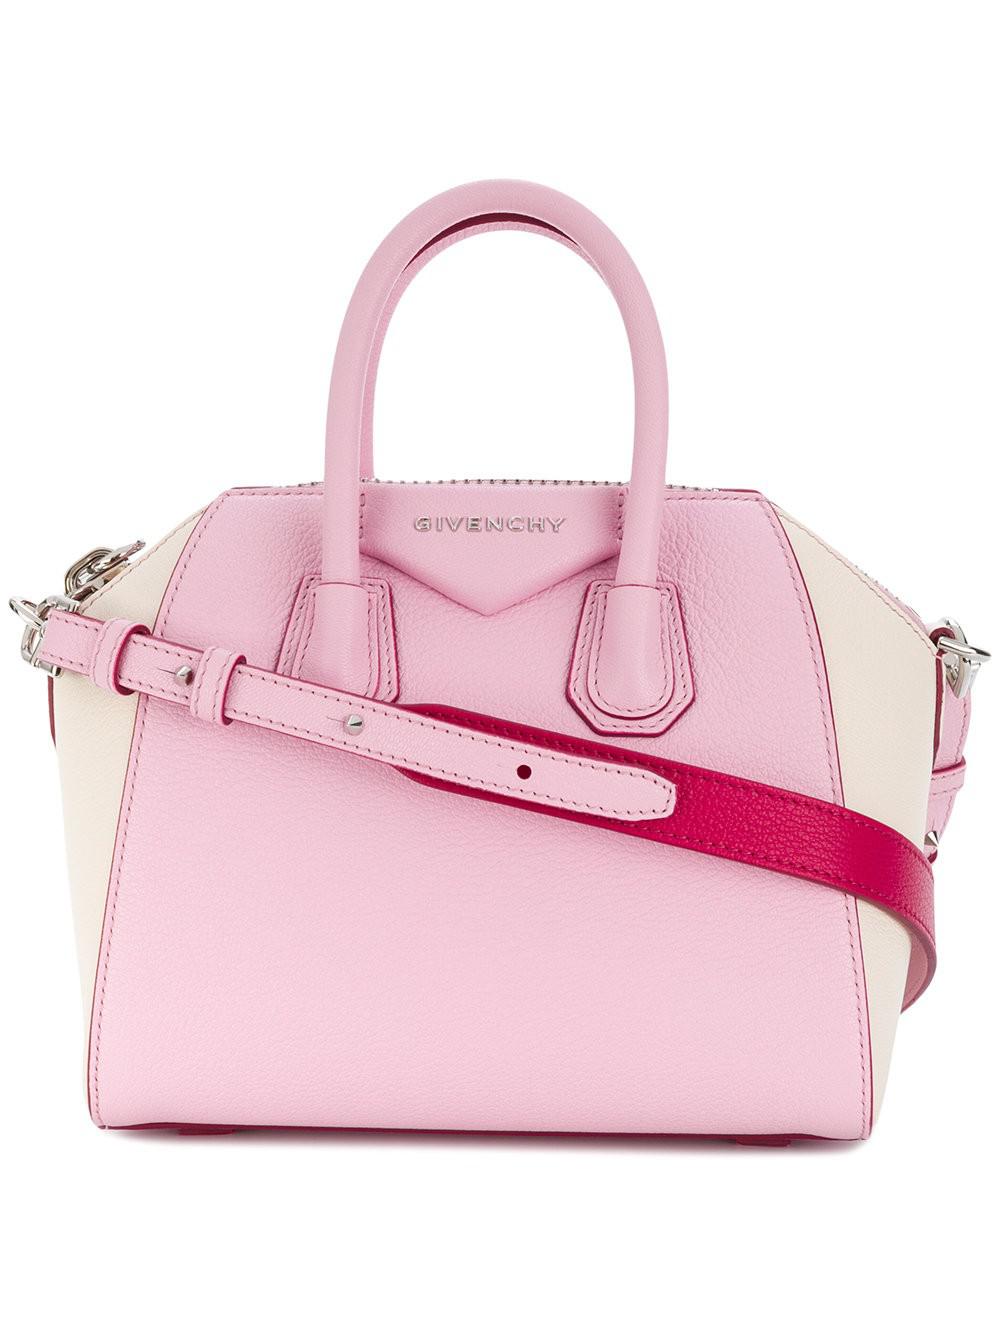 Givenchy Pink Mini Antigona Bag in Pink - Lyst